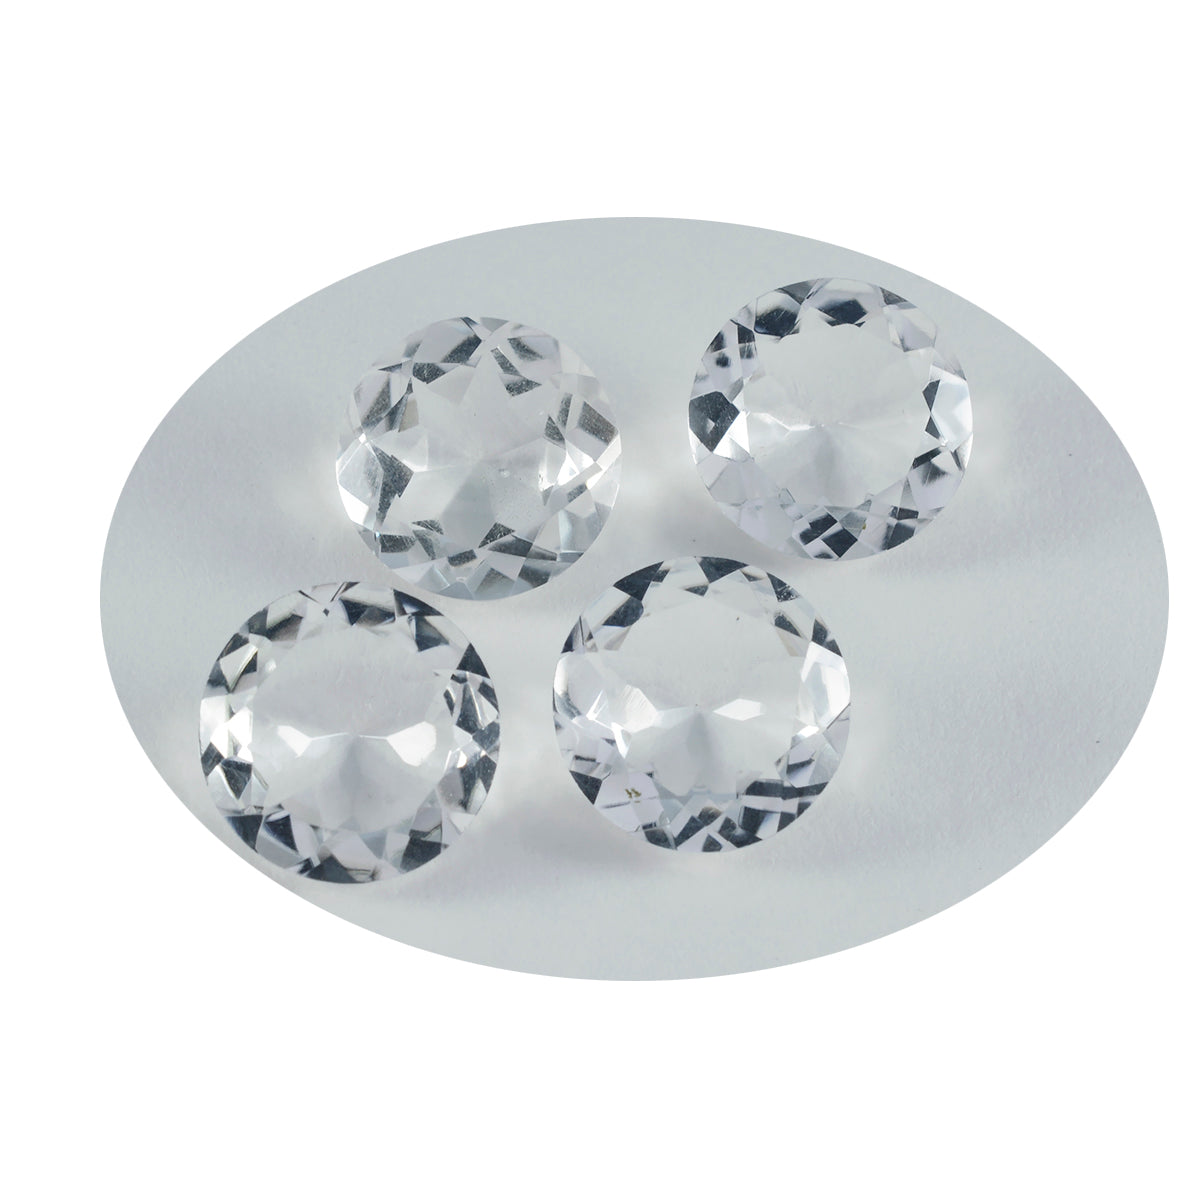 Riyogems 1PC White Crystal Quartz Faceted 13x13 mm Round Shape Good Quality Gems